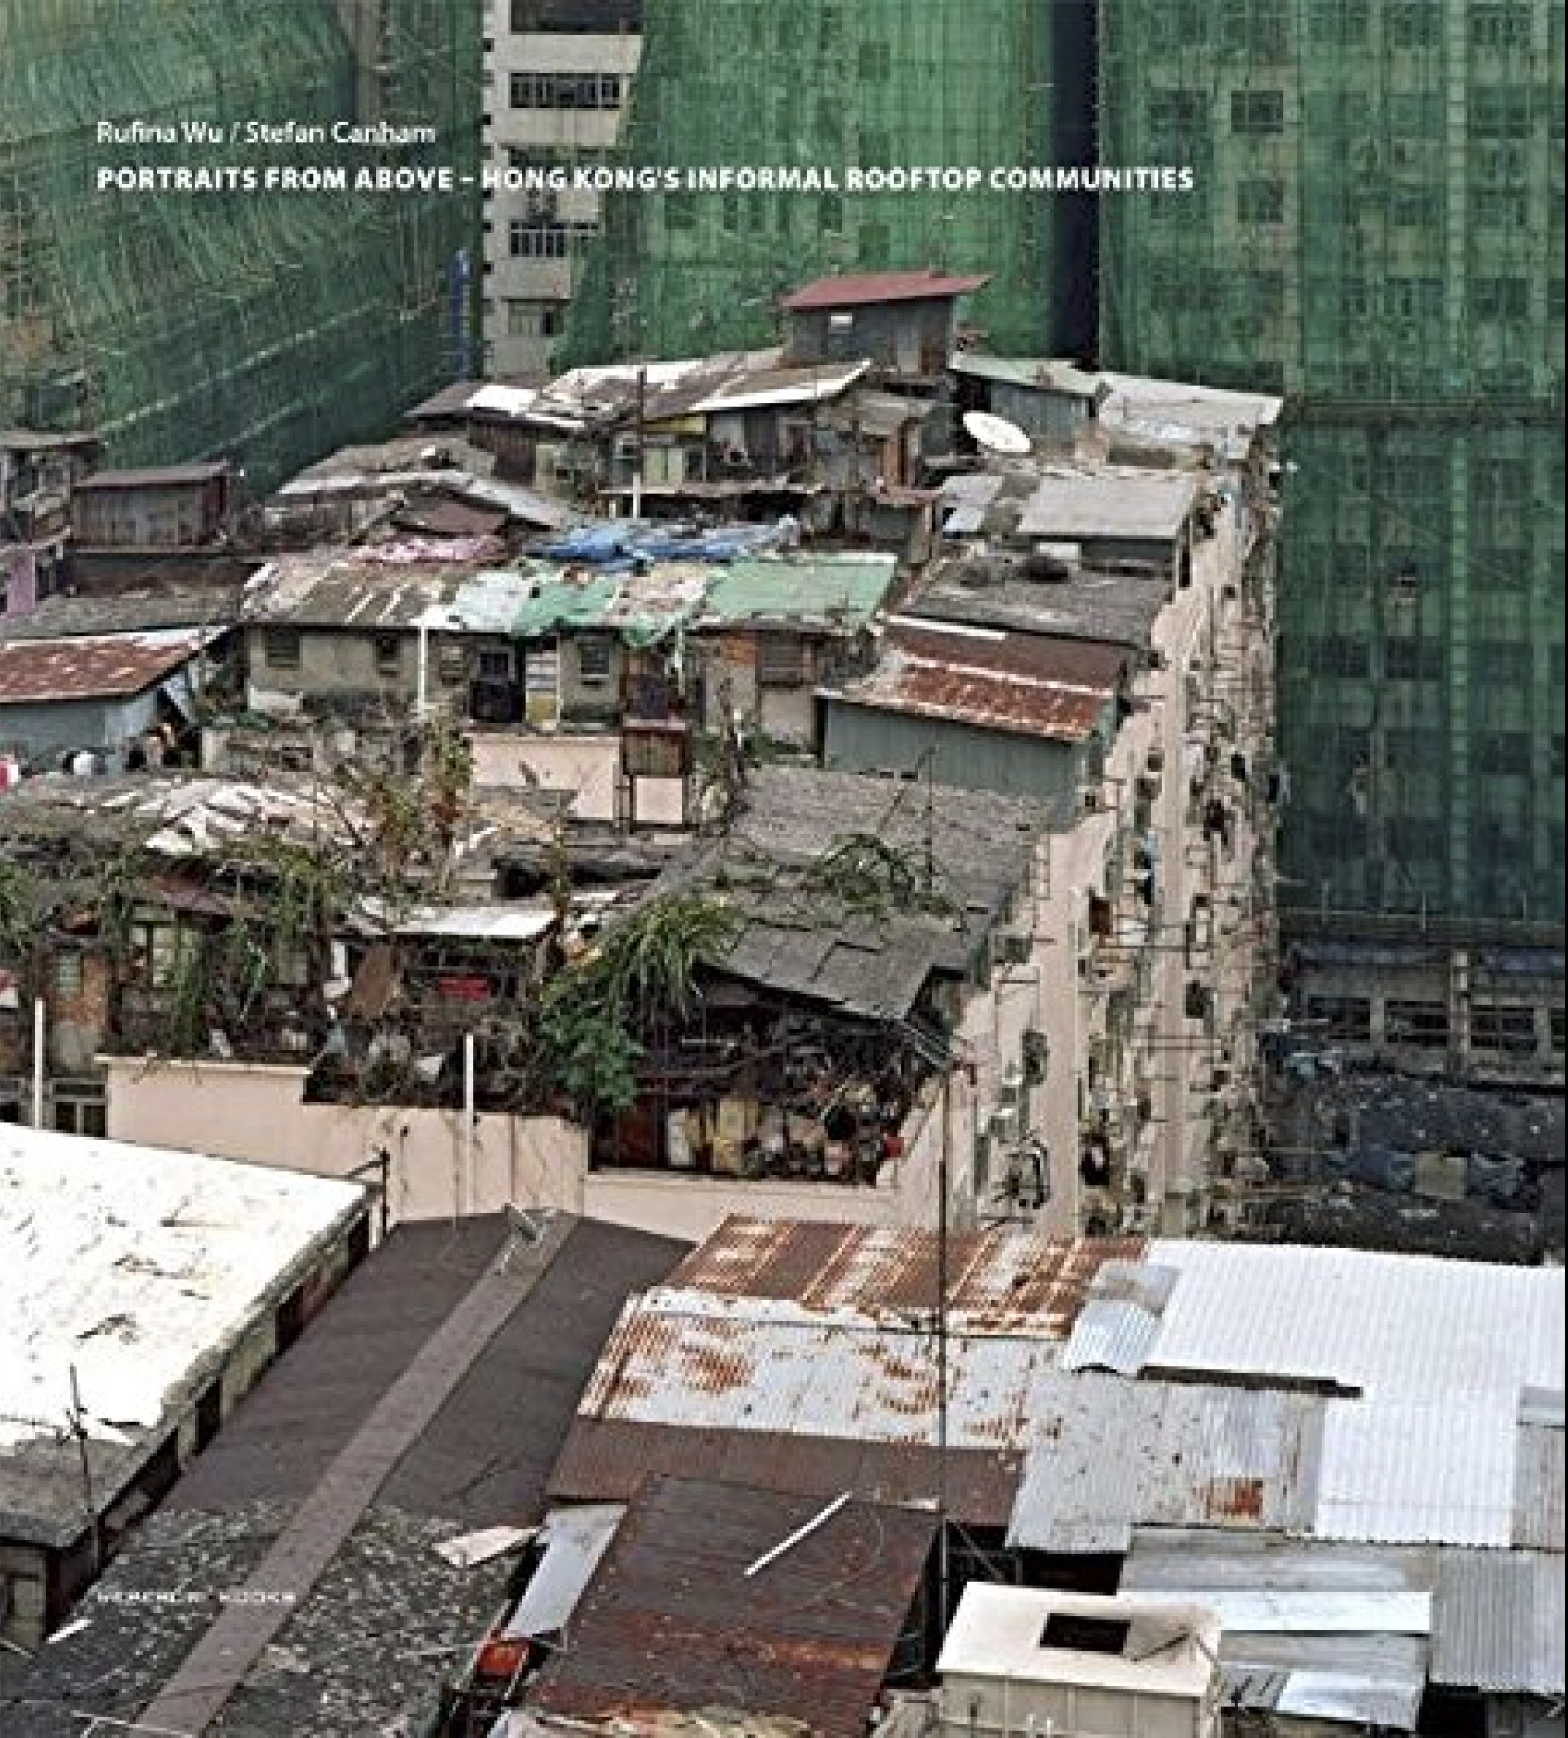 Portraits from above: Hong Kong's informal rooftop communities